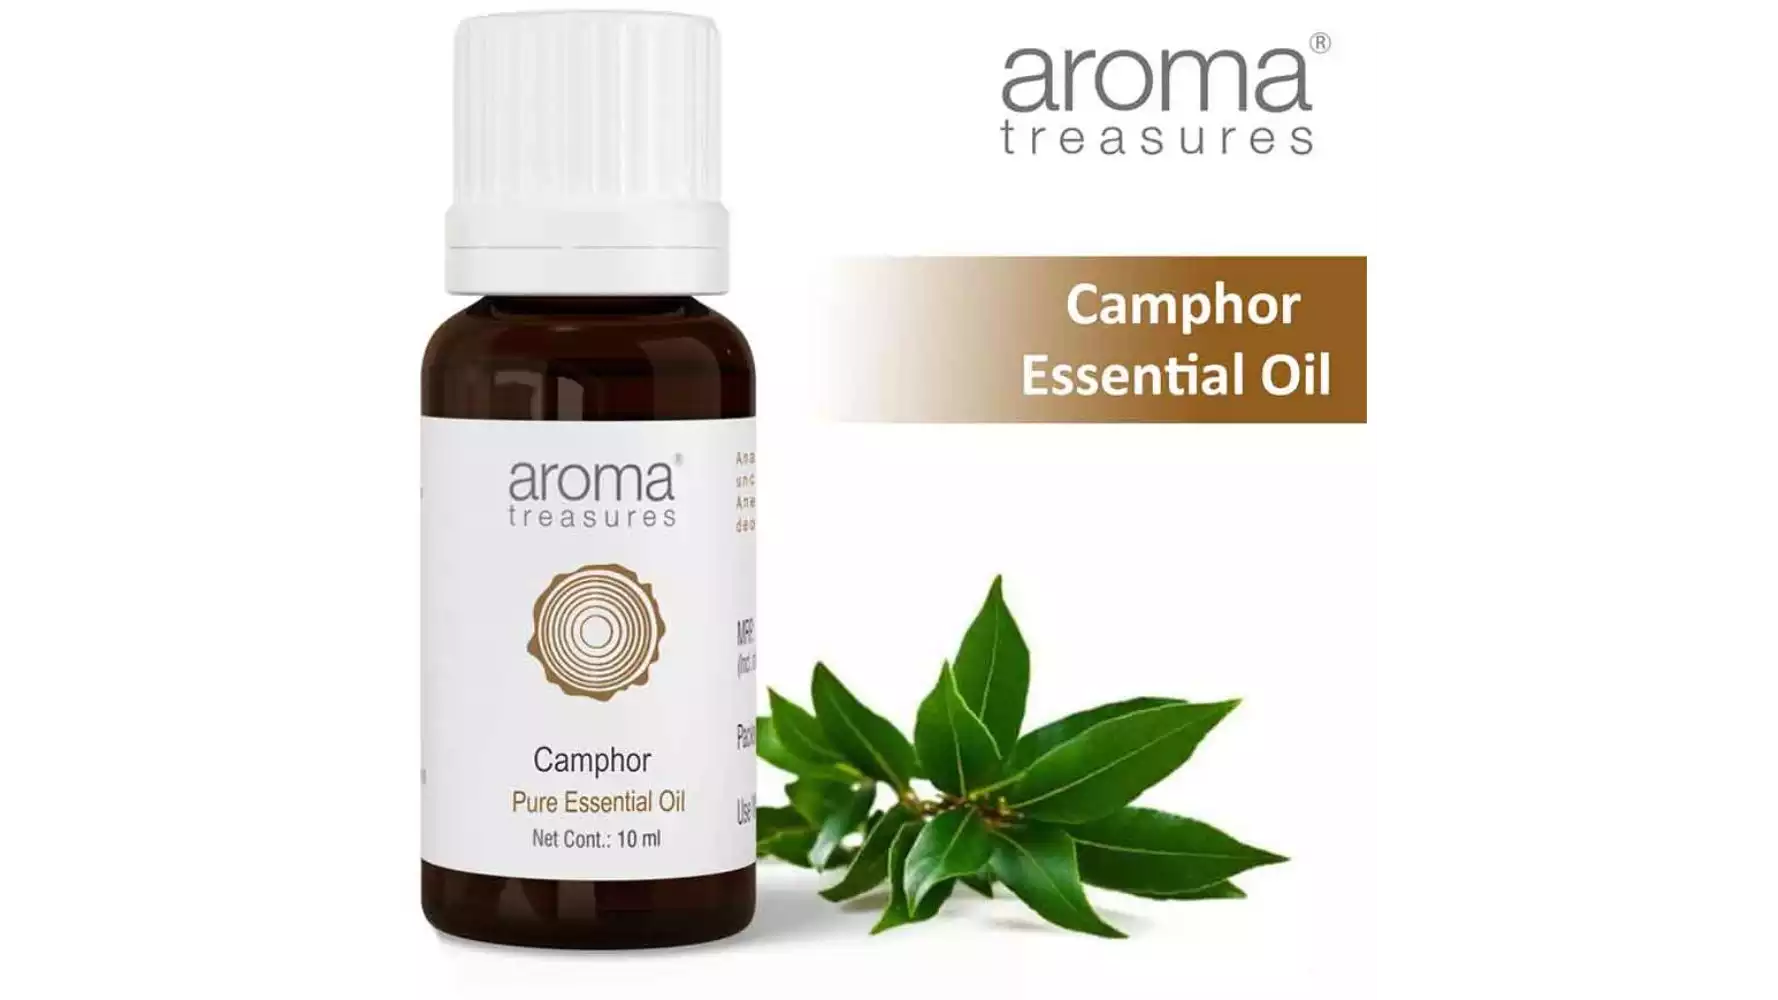 Aroma Treasures Camphor Essential Oil (10ml)